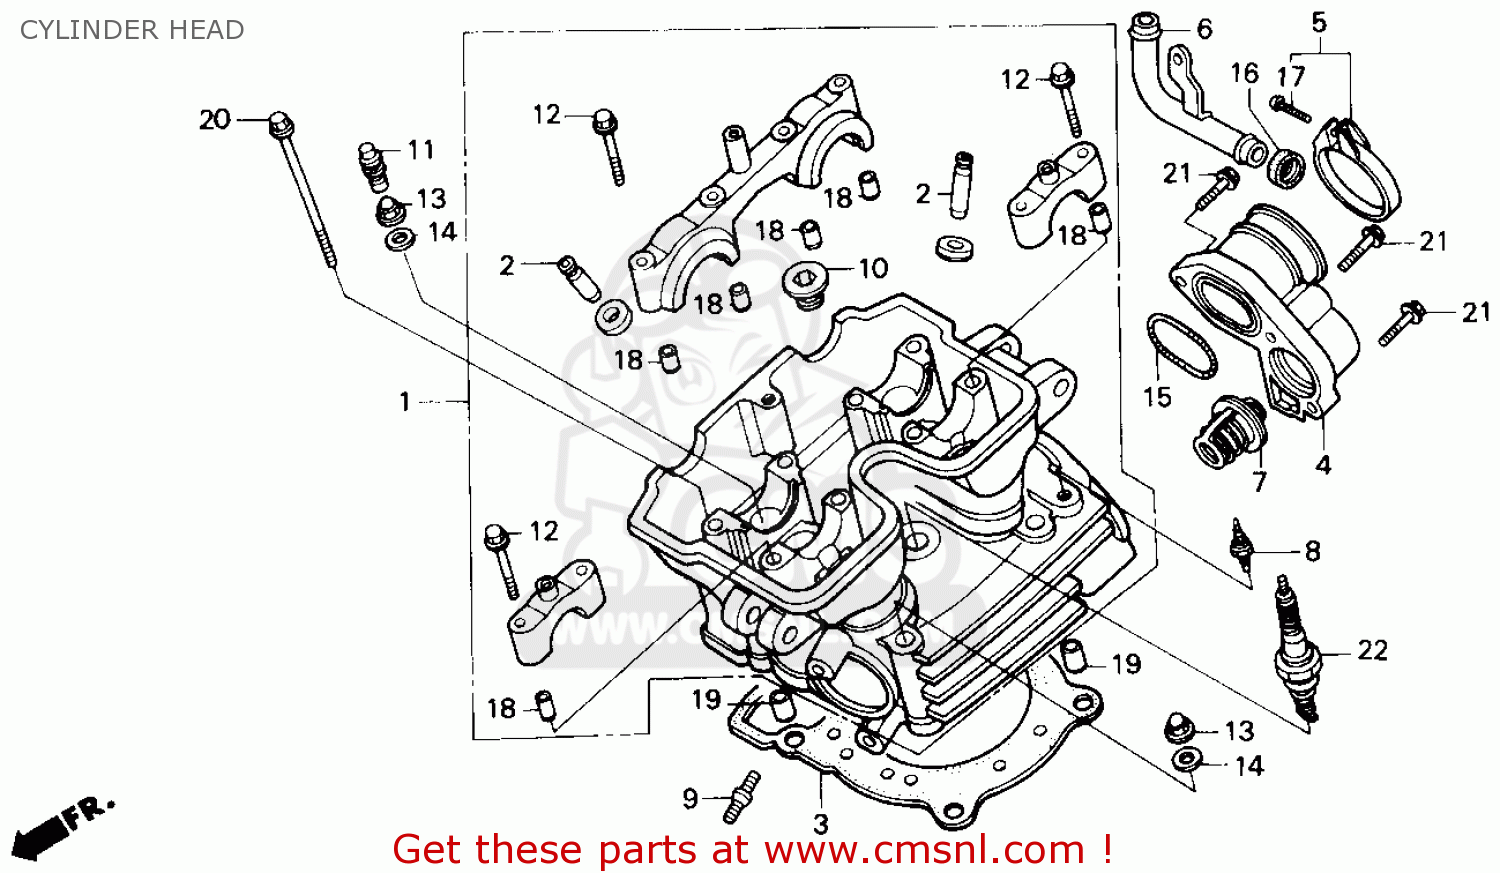 1988 Honda nx 250 parts #3